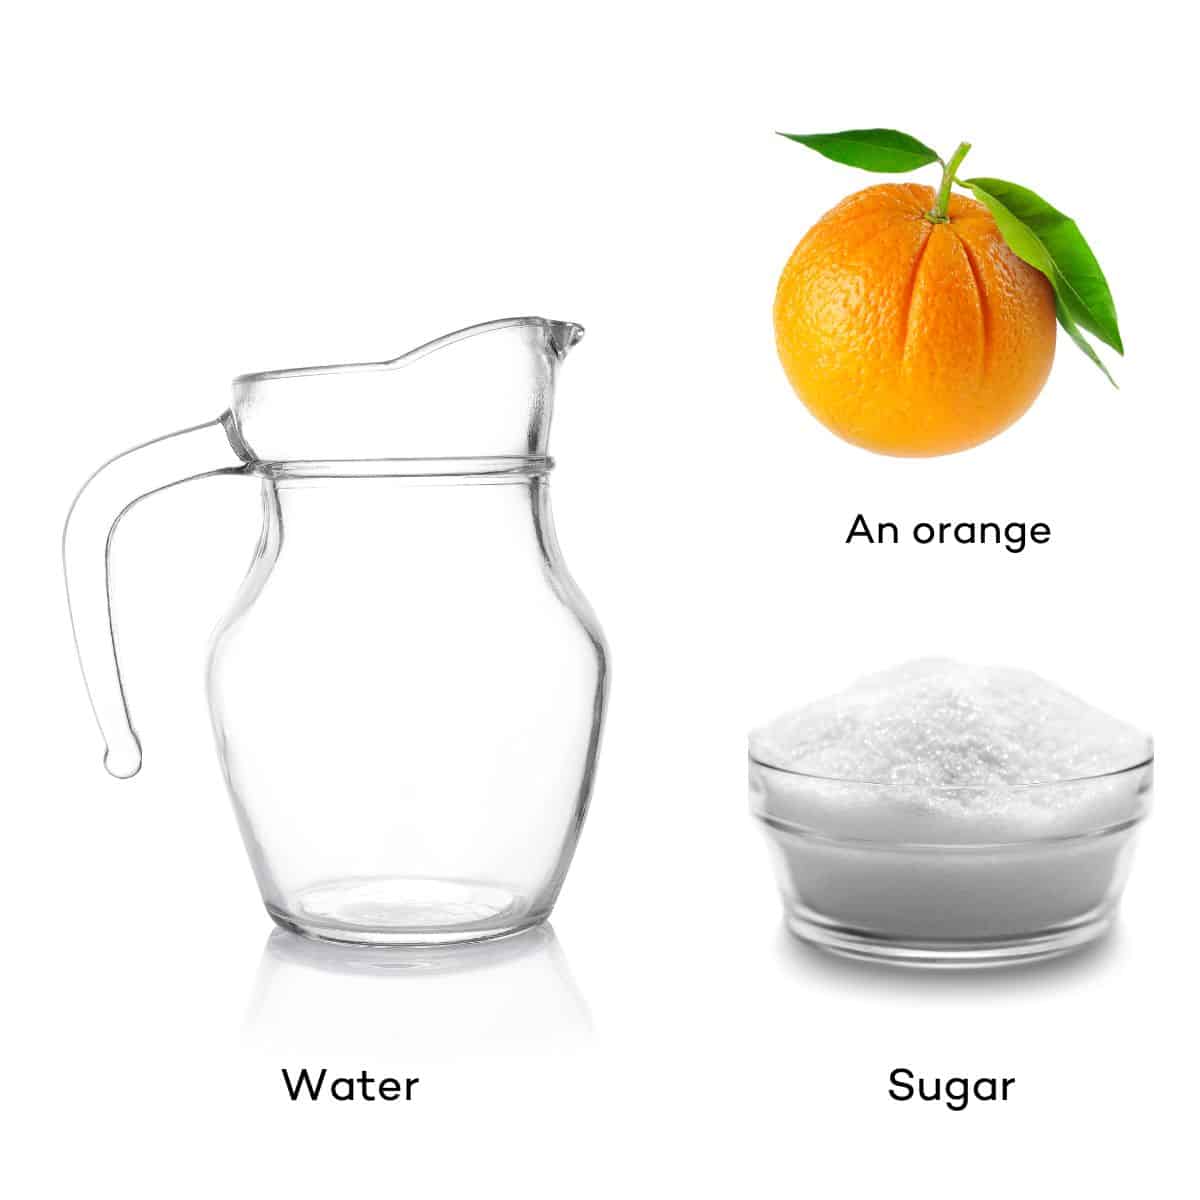 Ingredients for orange syrup. 